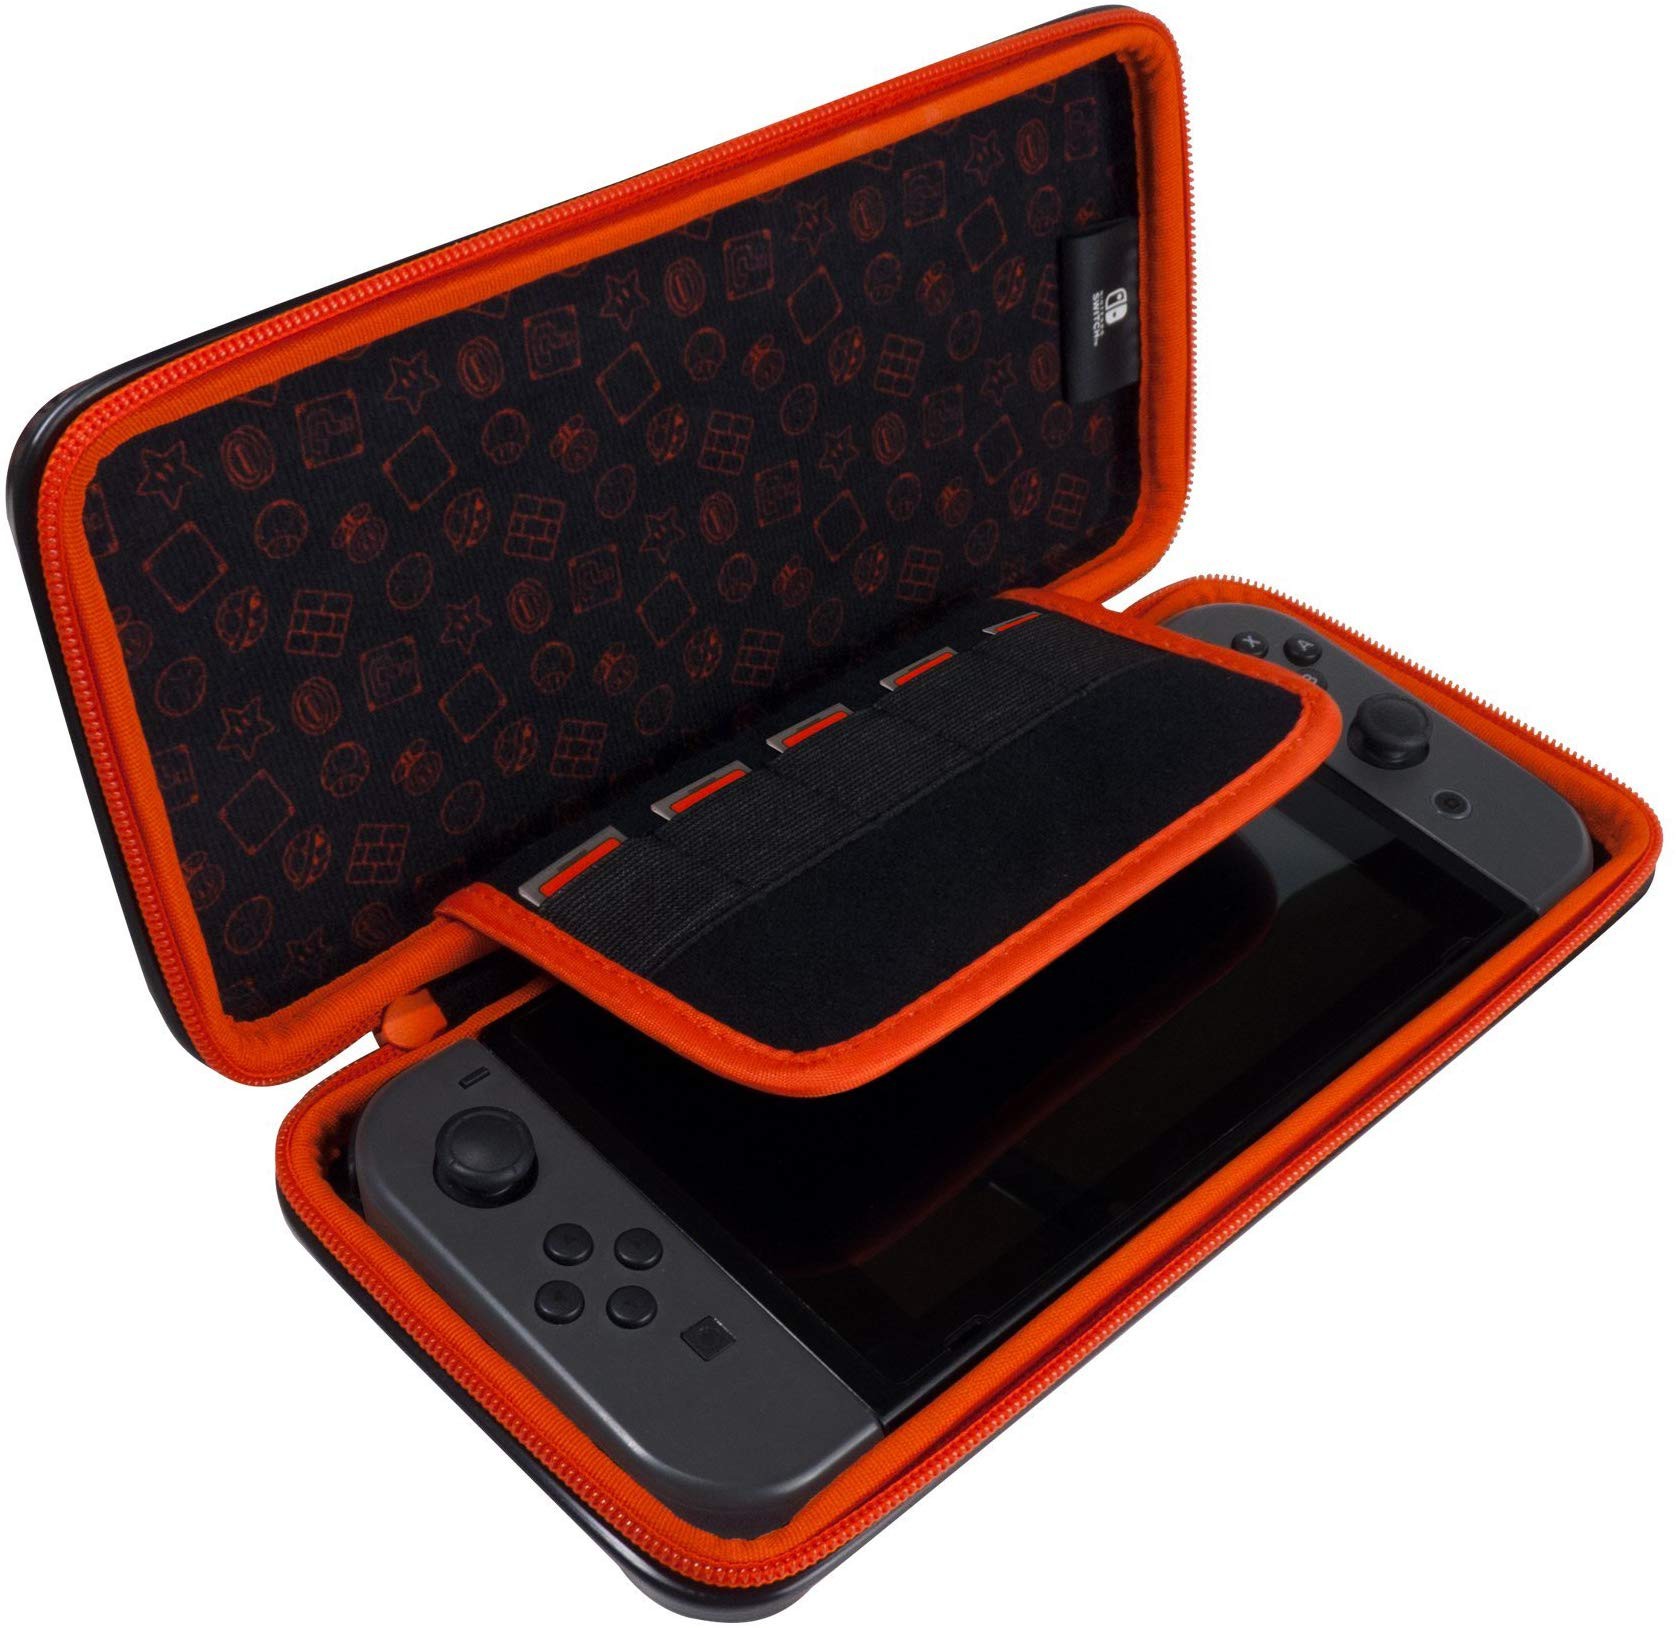 HORI Nintendo Switch Alumi Case (Mario Edition)